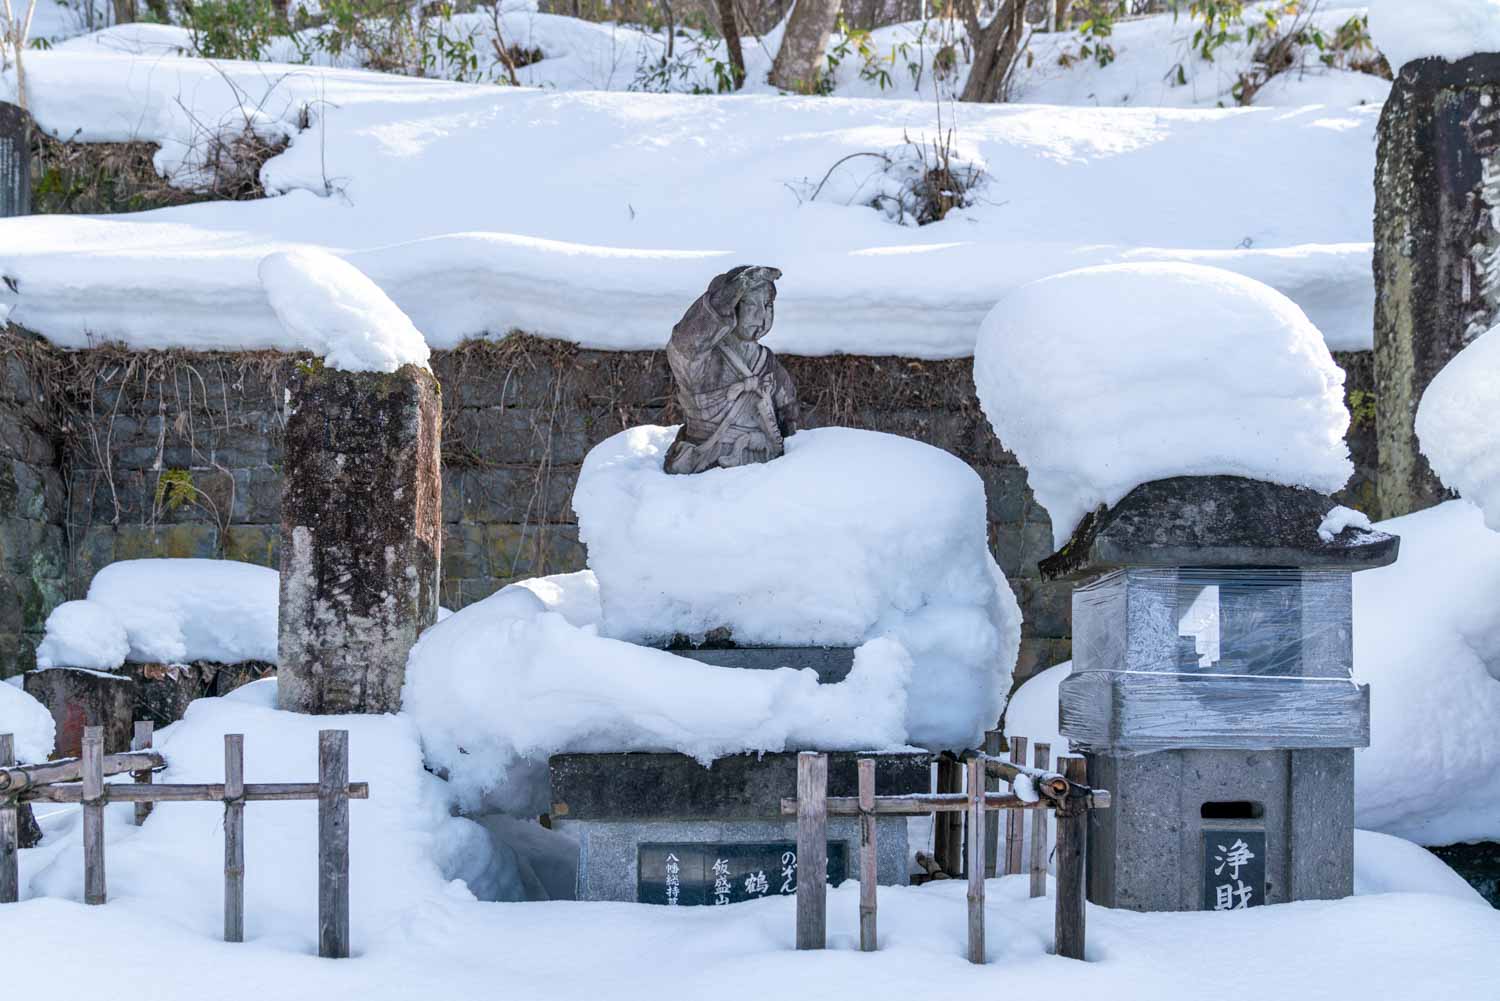 snowy Byakkotai memorial on Mt Iimoriyama in Aizu-Wakamatsu